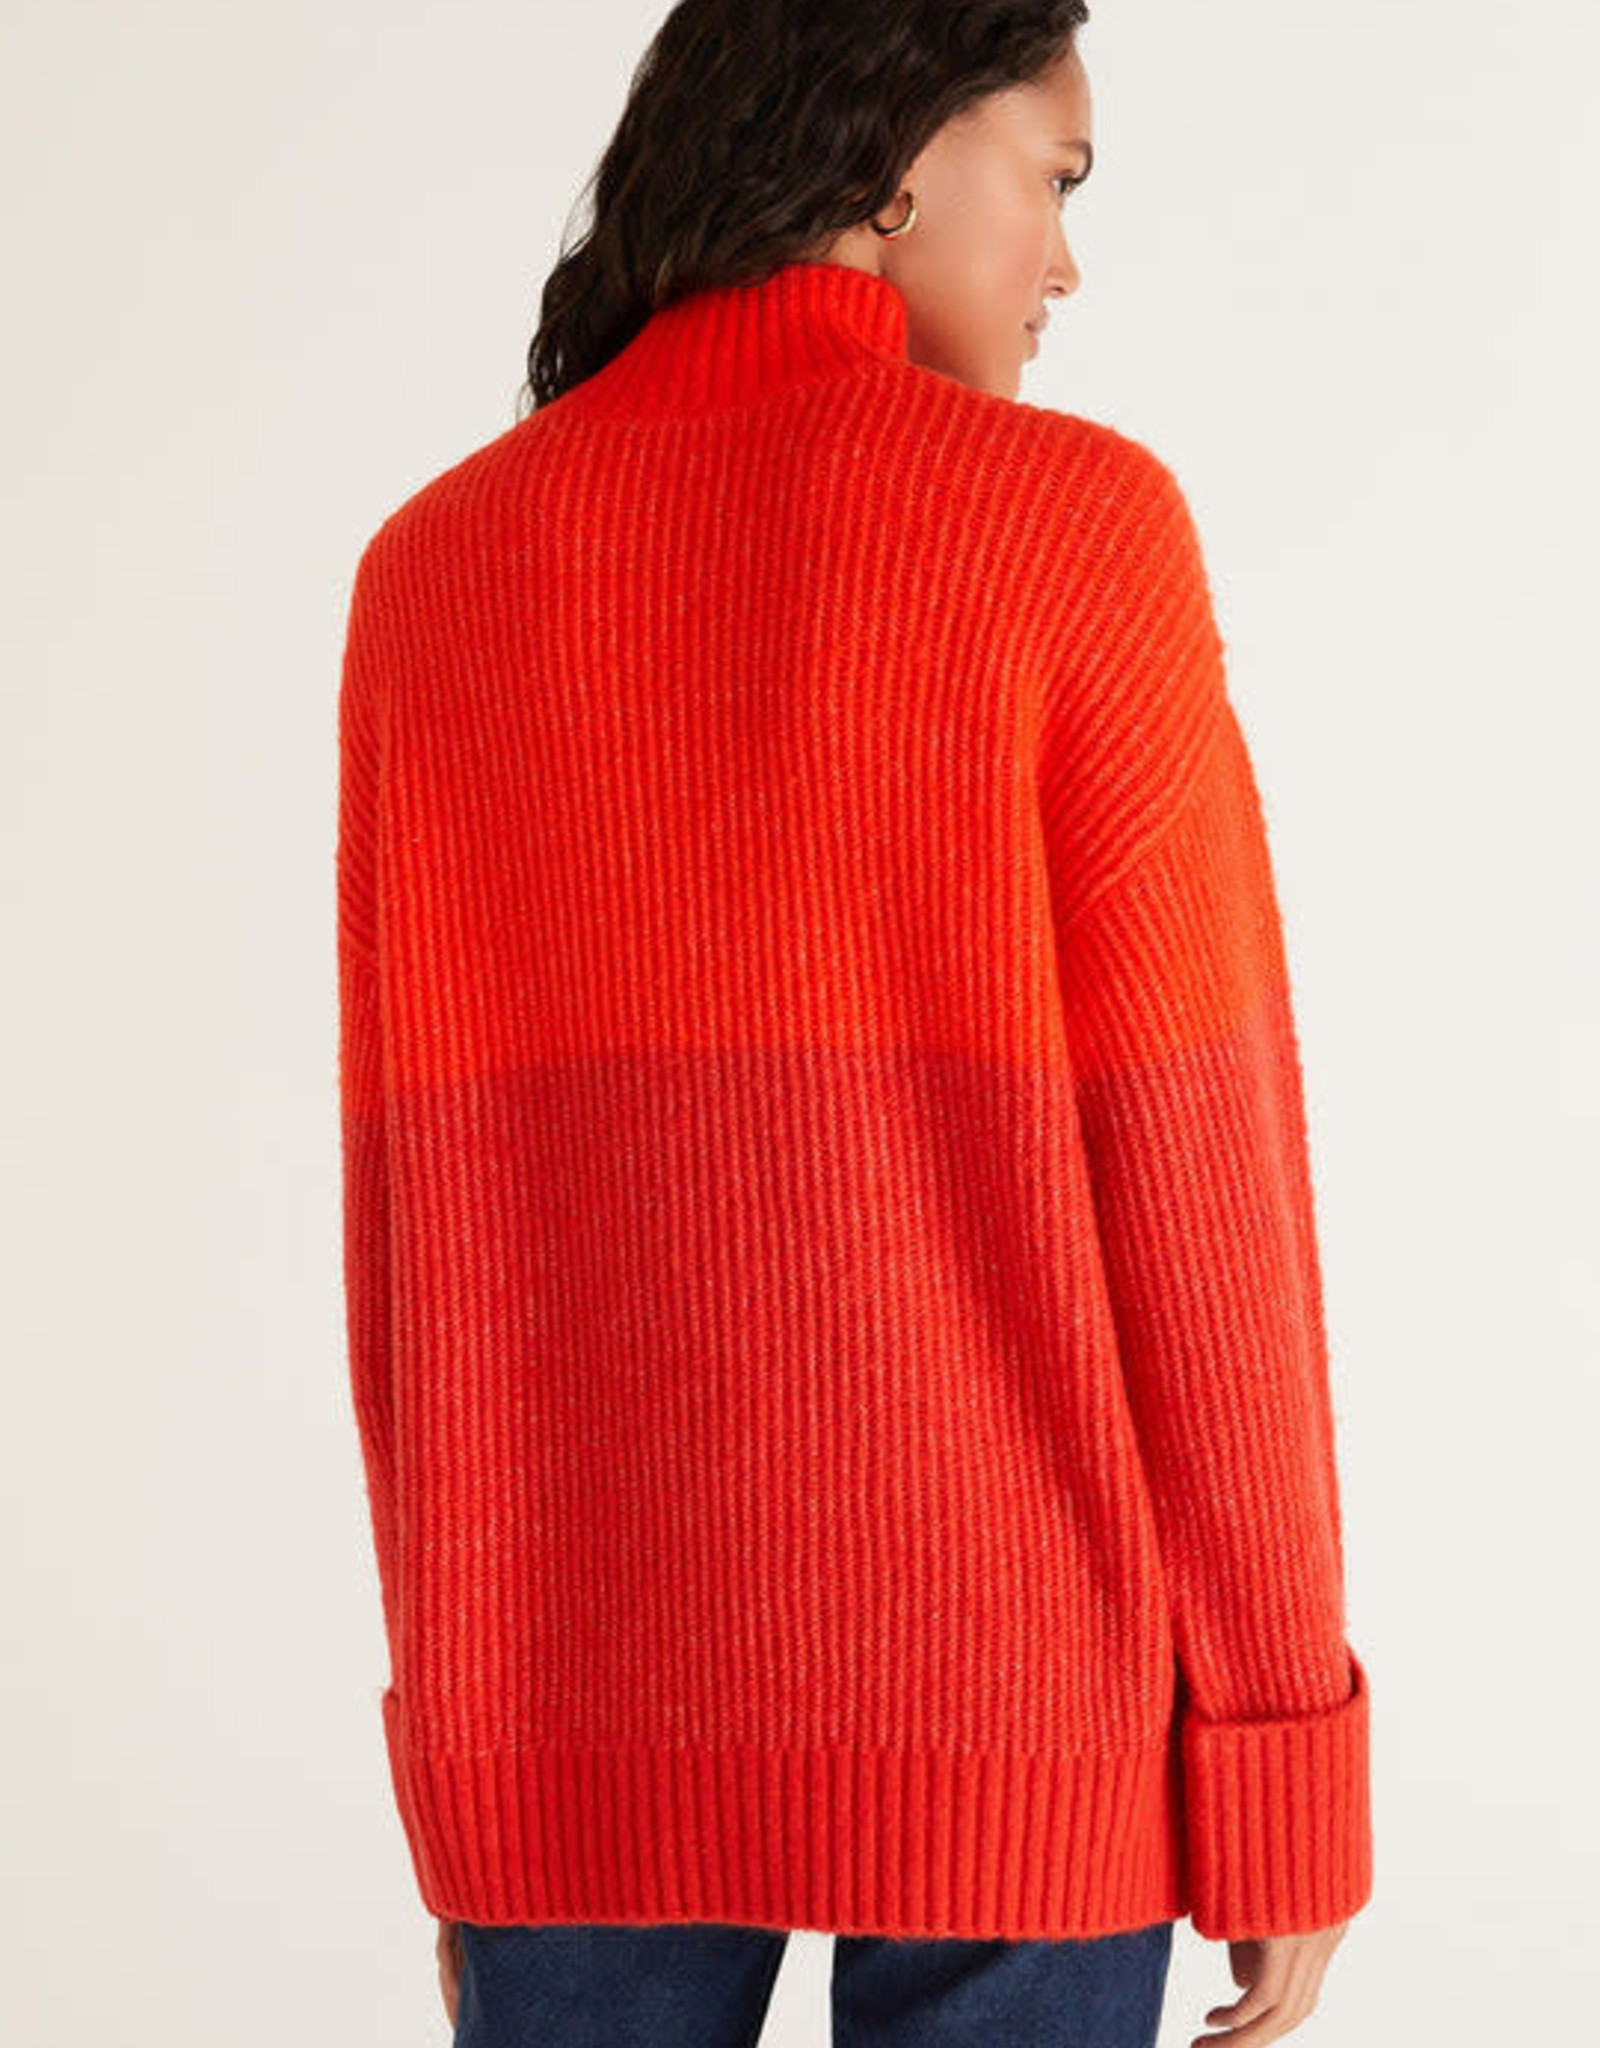 ZSupply Poppy Striped Sweater